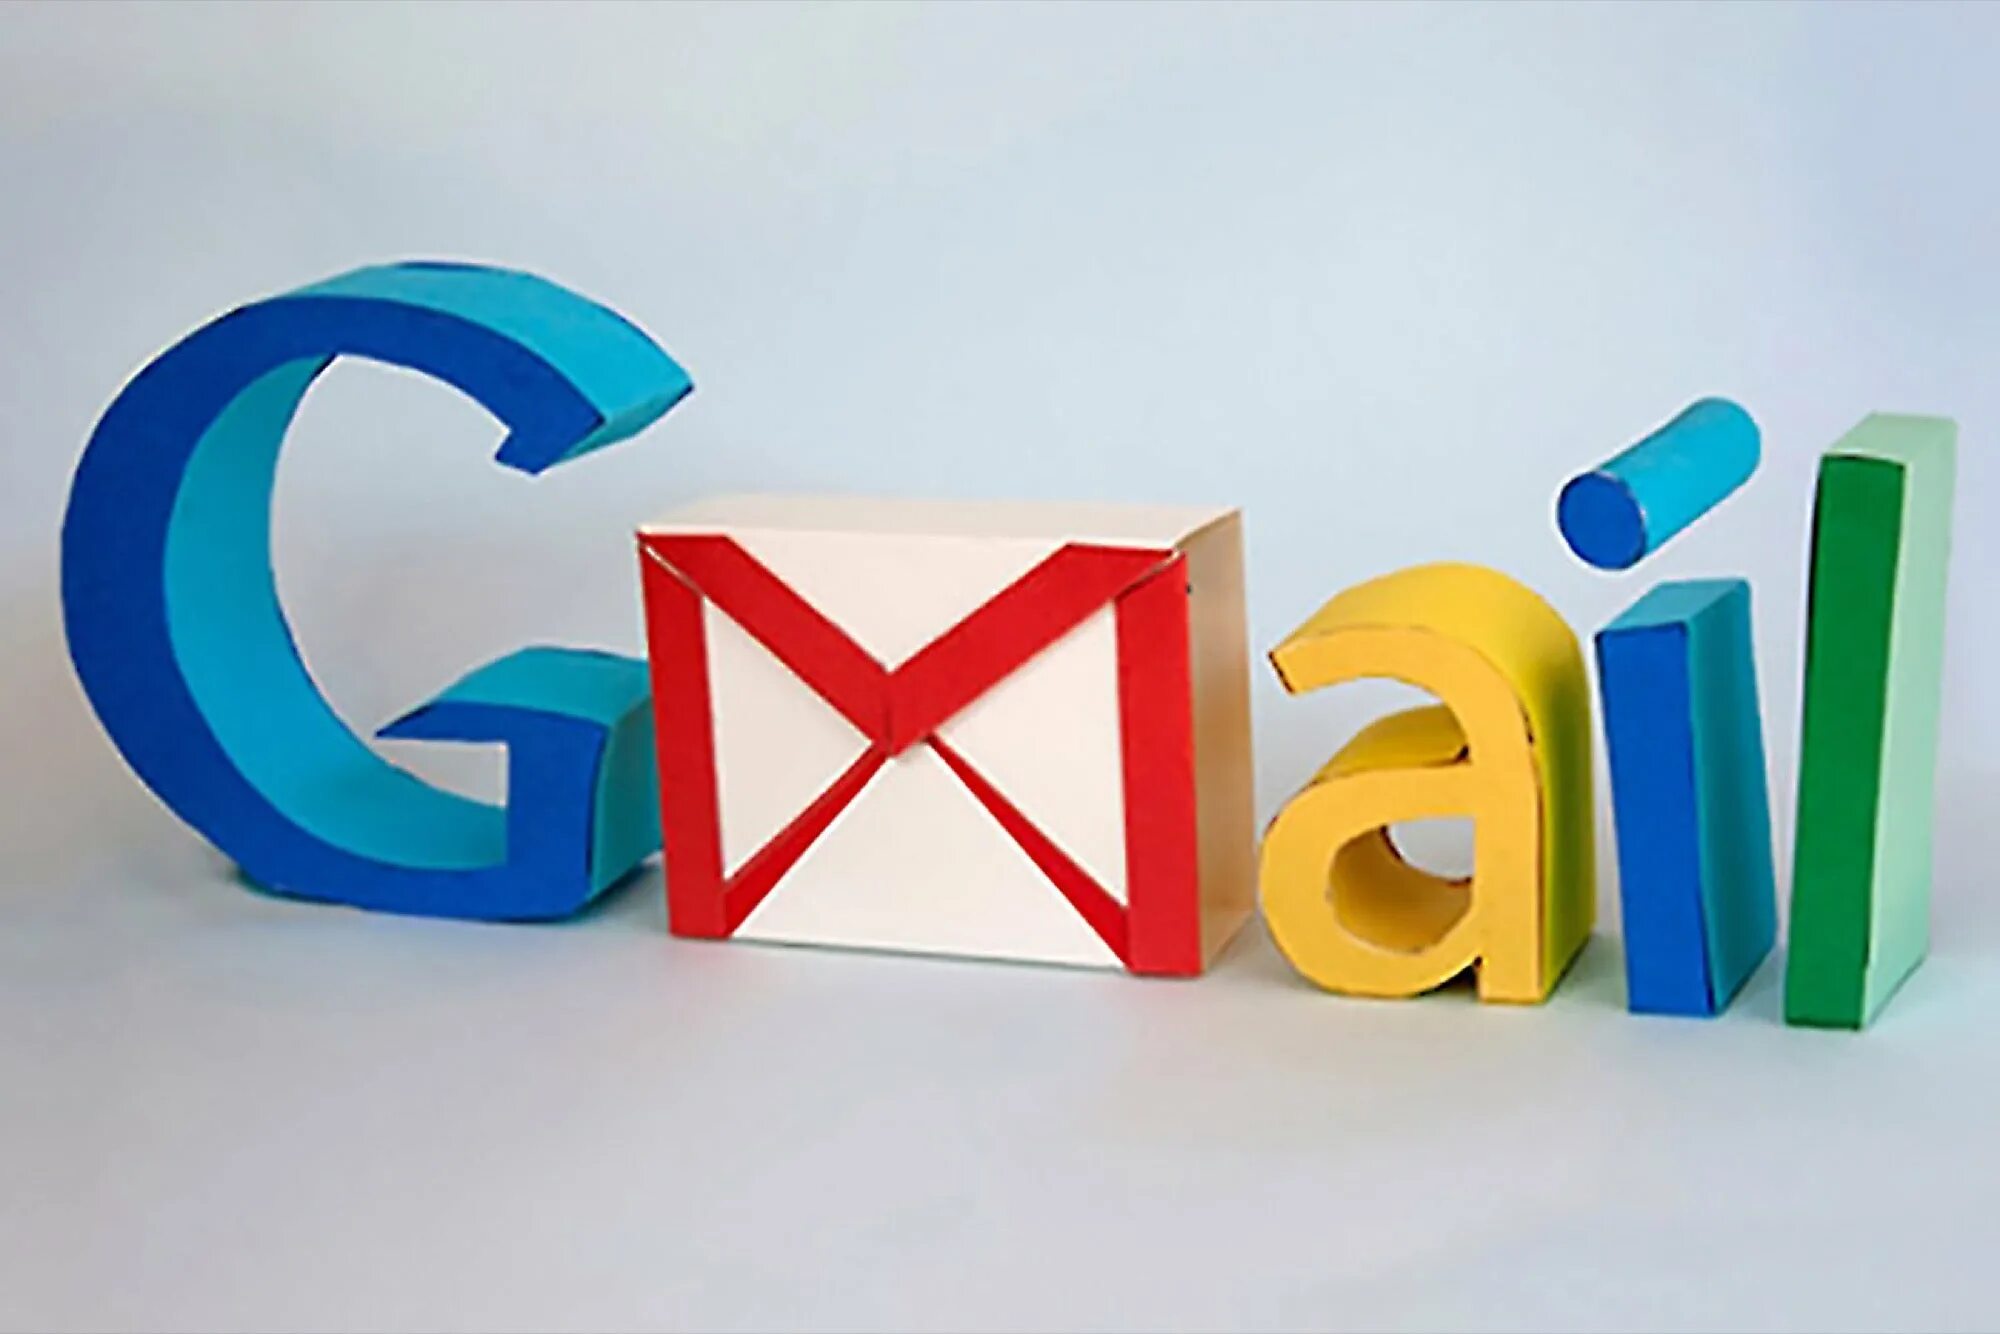 Gmail video. Gmail почта. Картинка gmail почты. Gmail логотип.